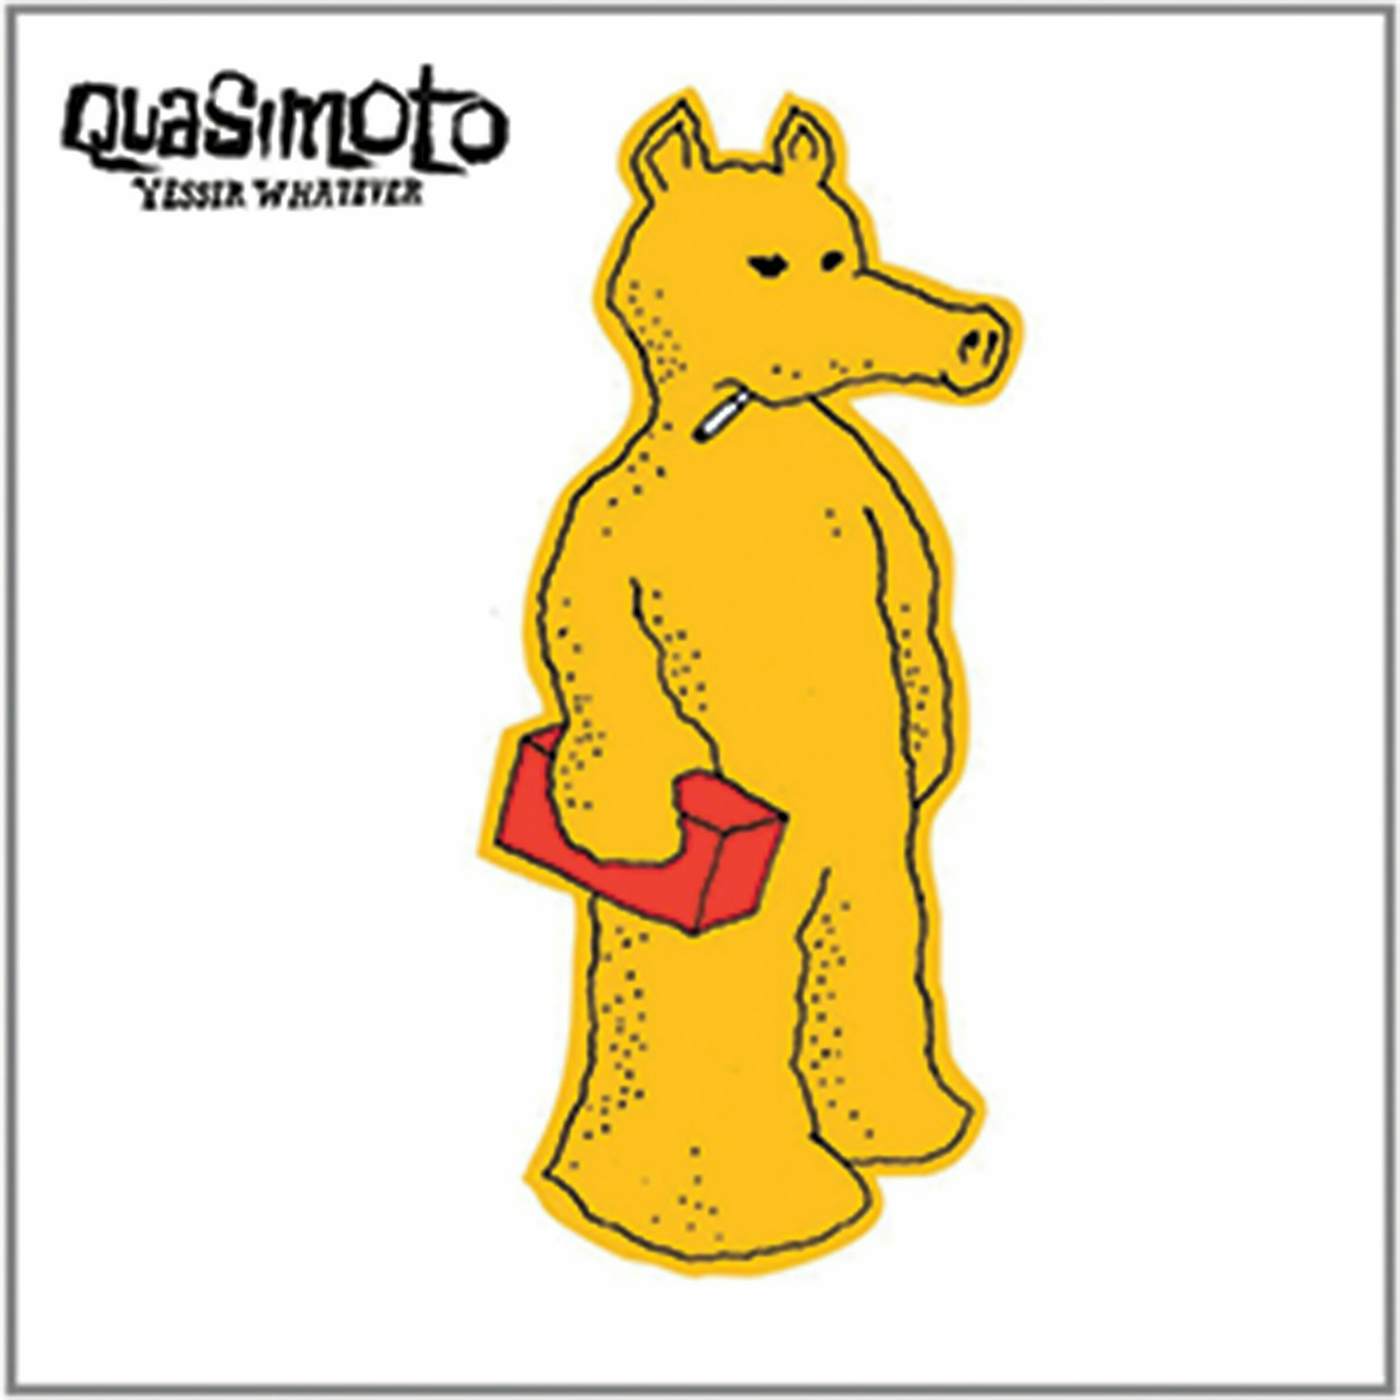 Quasimoto YESSIR WHATEVER CD